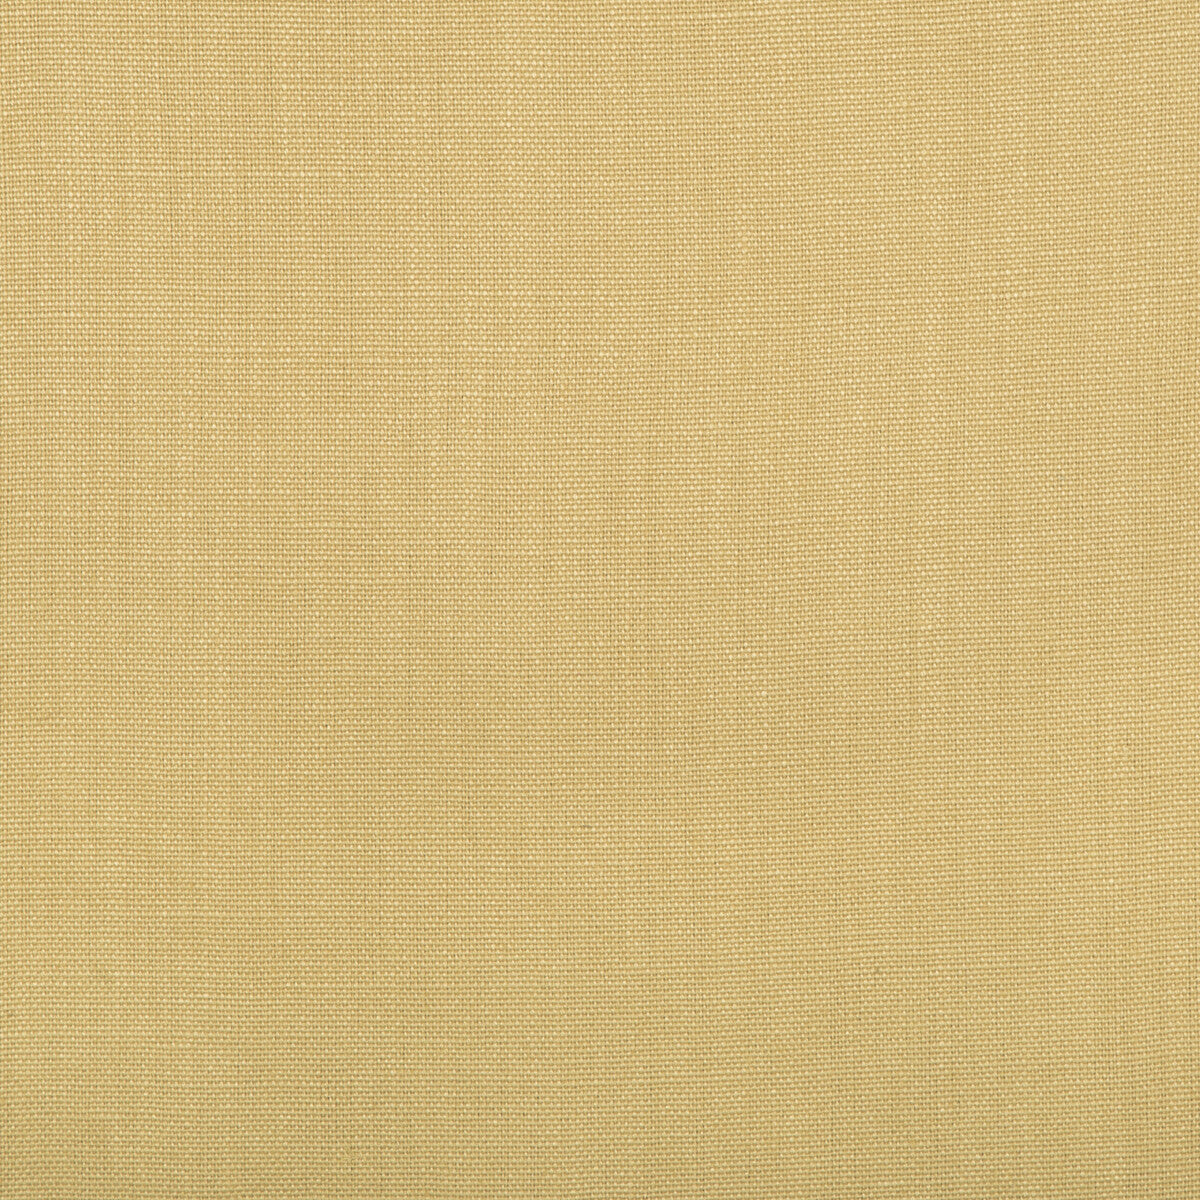 Hampton Linen fabric in burlap color - pattern 2012171.414.0 - by Lee Jofa